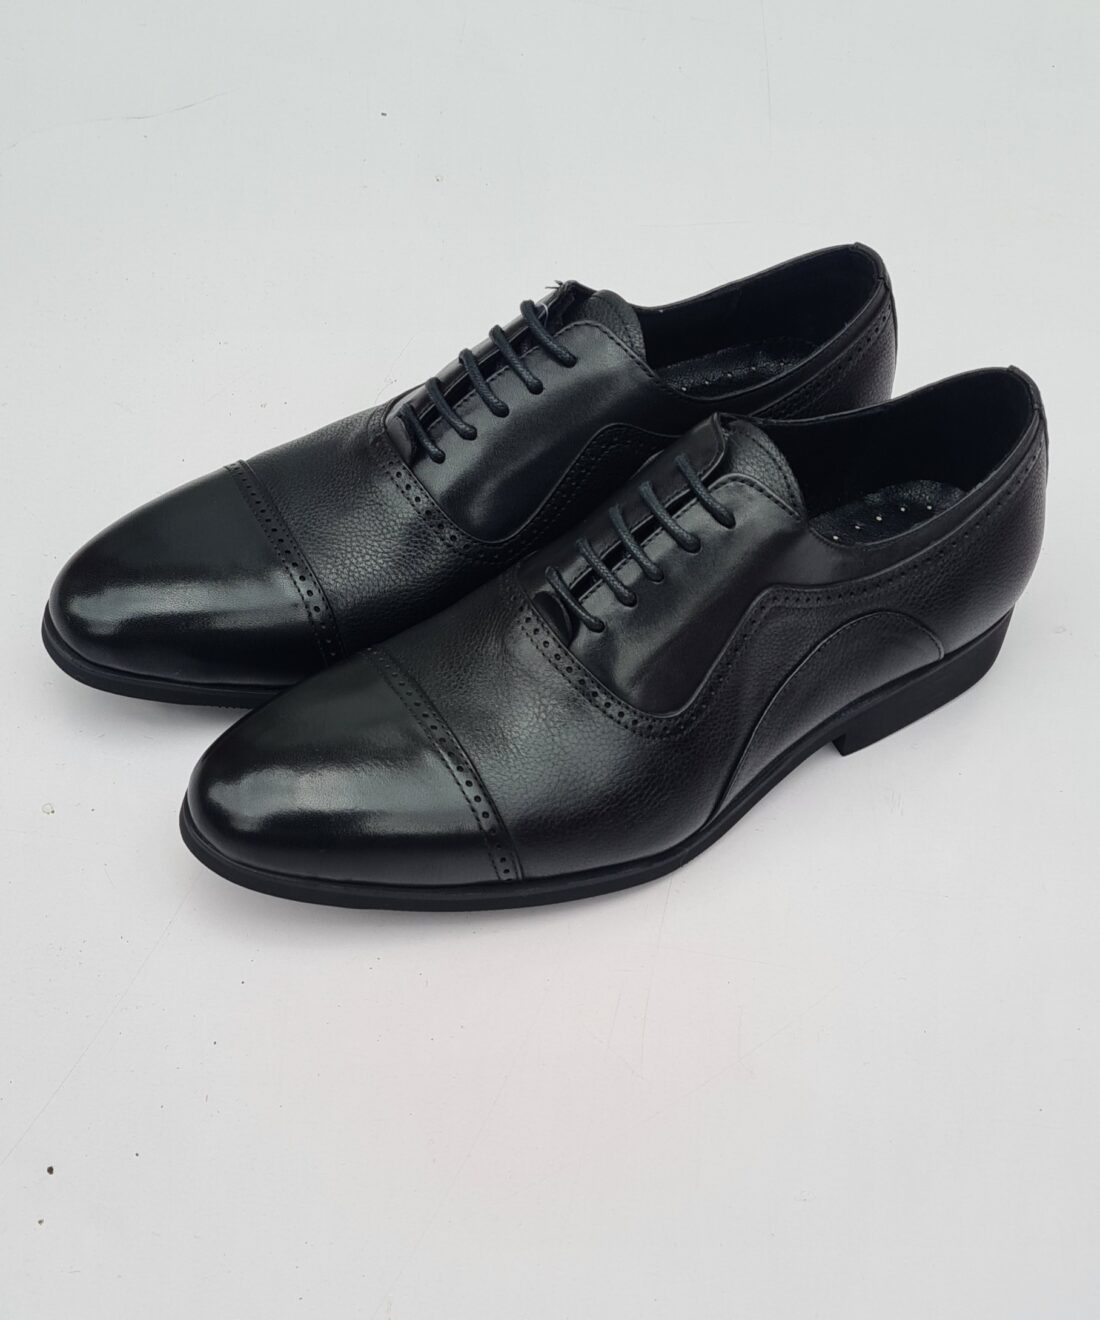 Black Slating leather Oxford shoes